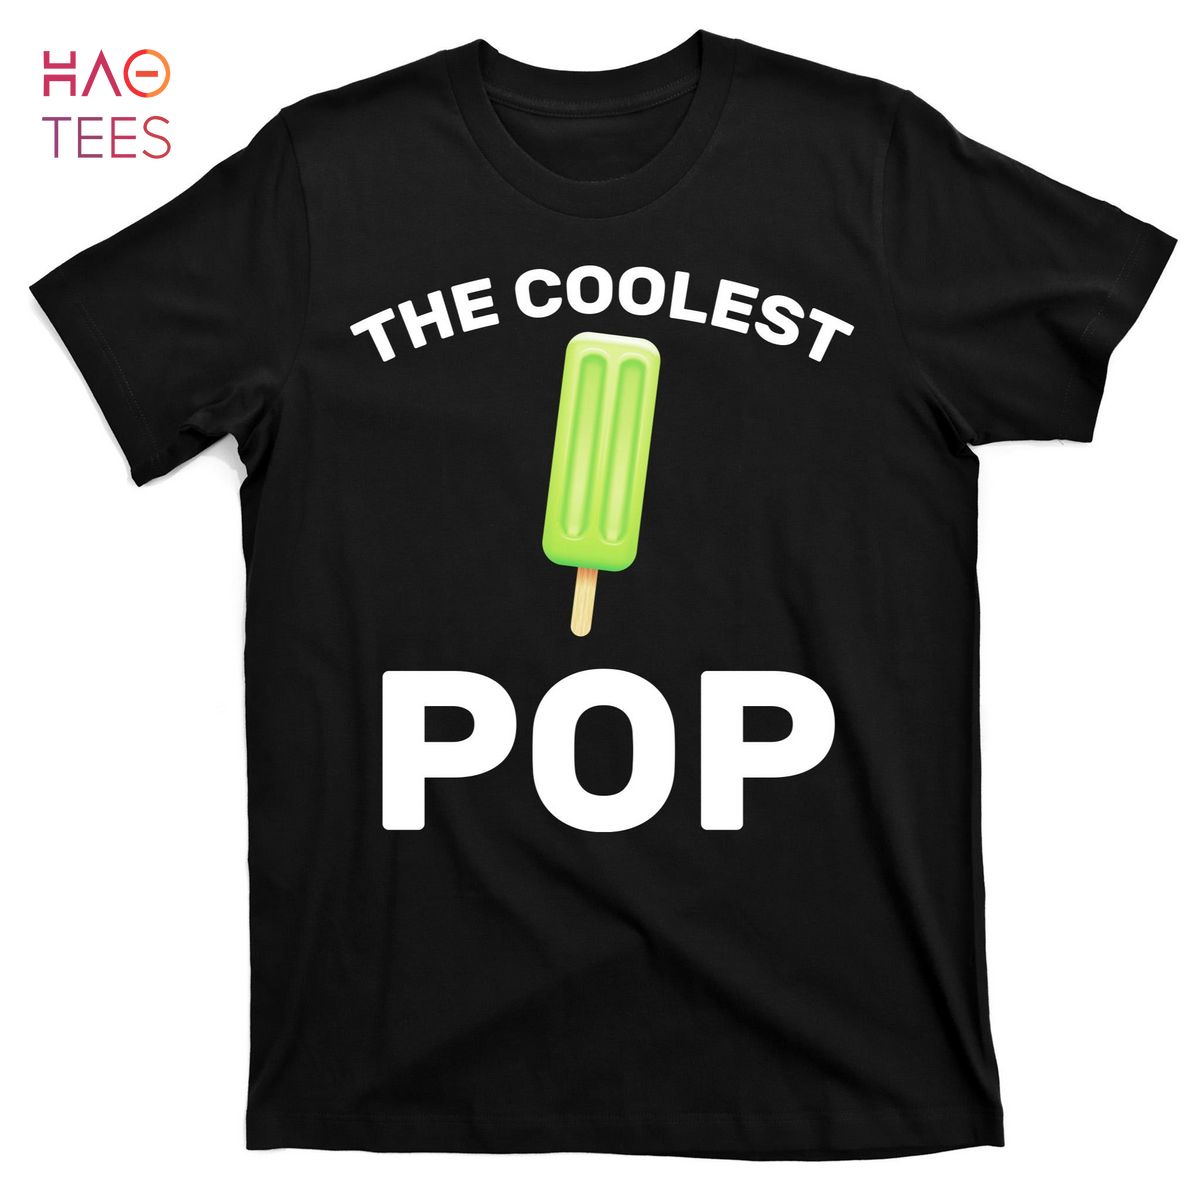 HOT The Coolest Pop T-Shirts